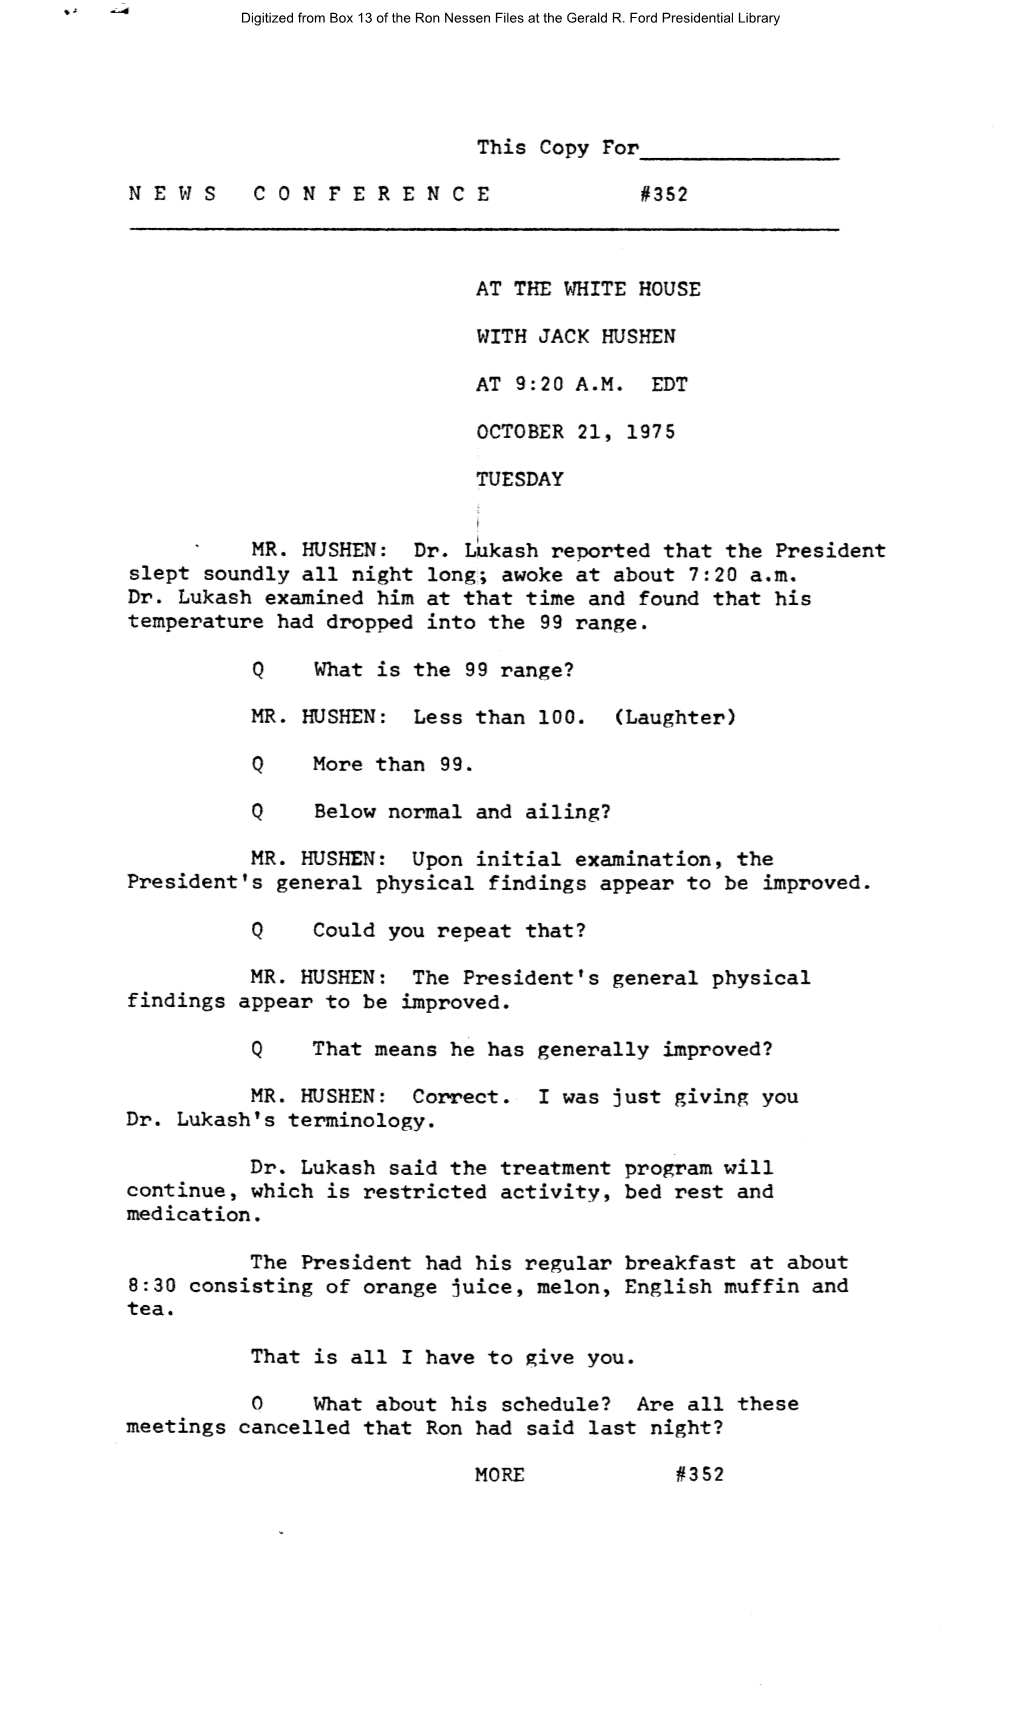 Press Secretary Briefings, 10/21/75